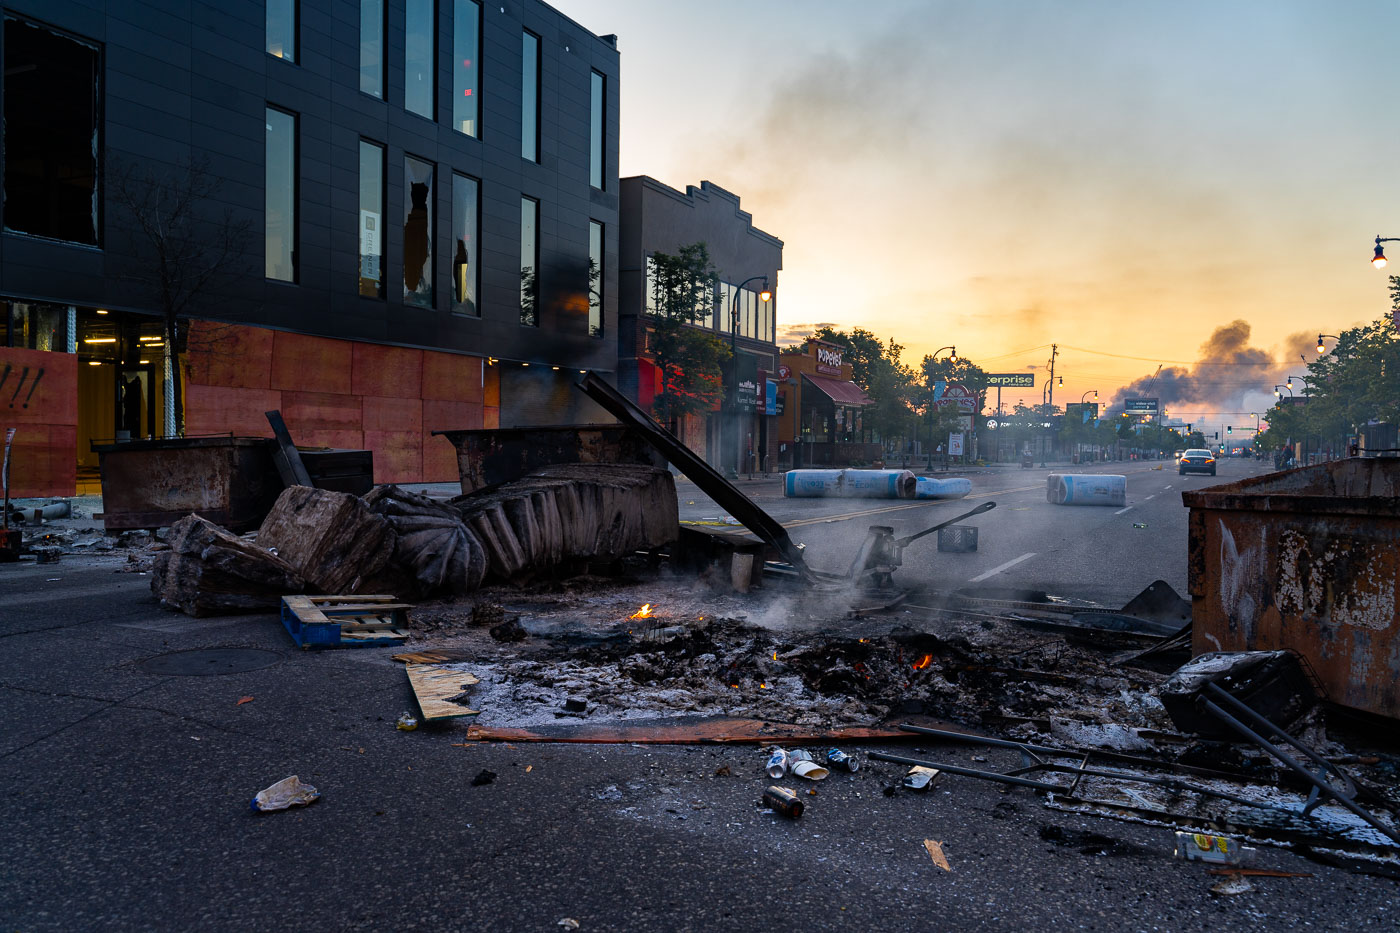 Dumpsters still burning as sun rises on Lake Street